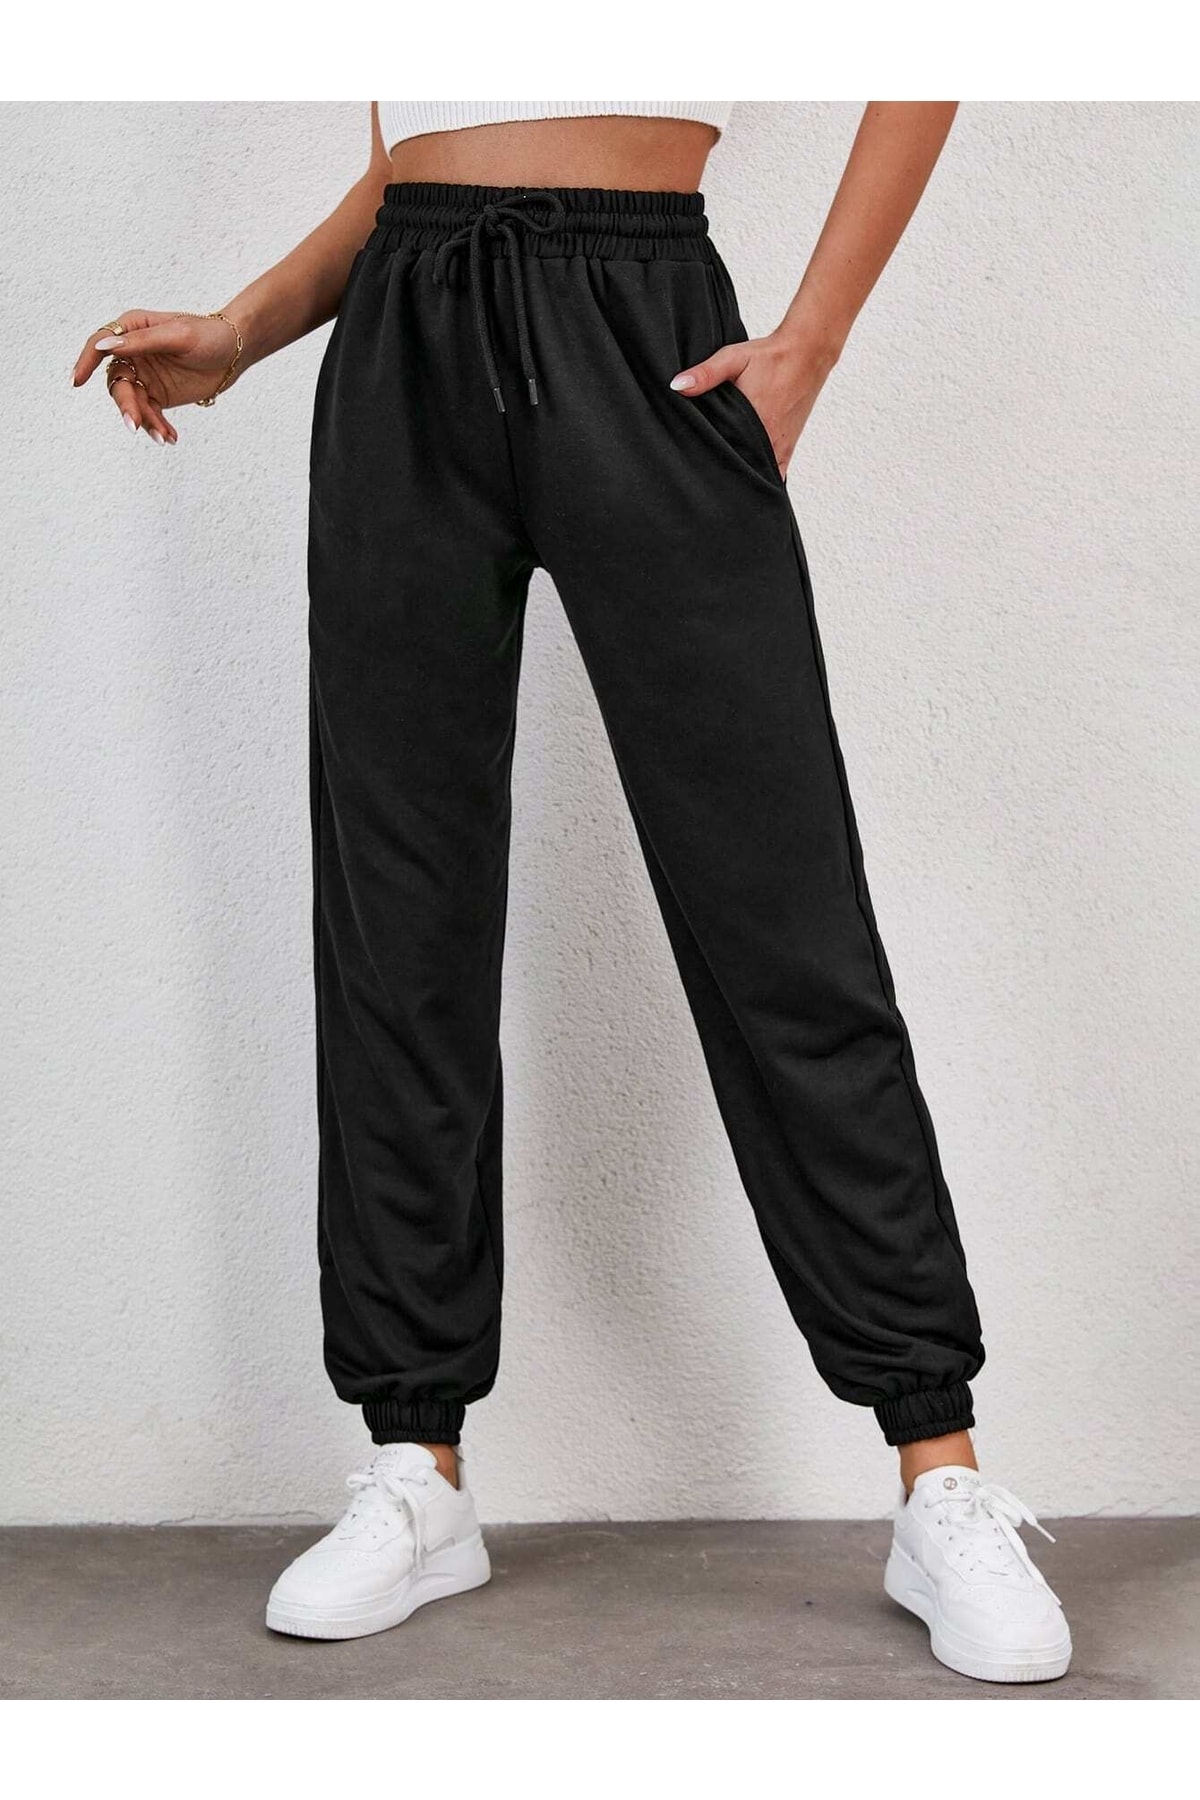 Levně armonika Women's Black Elastic Waist and Legs Sweatpants with Pockets